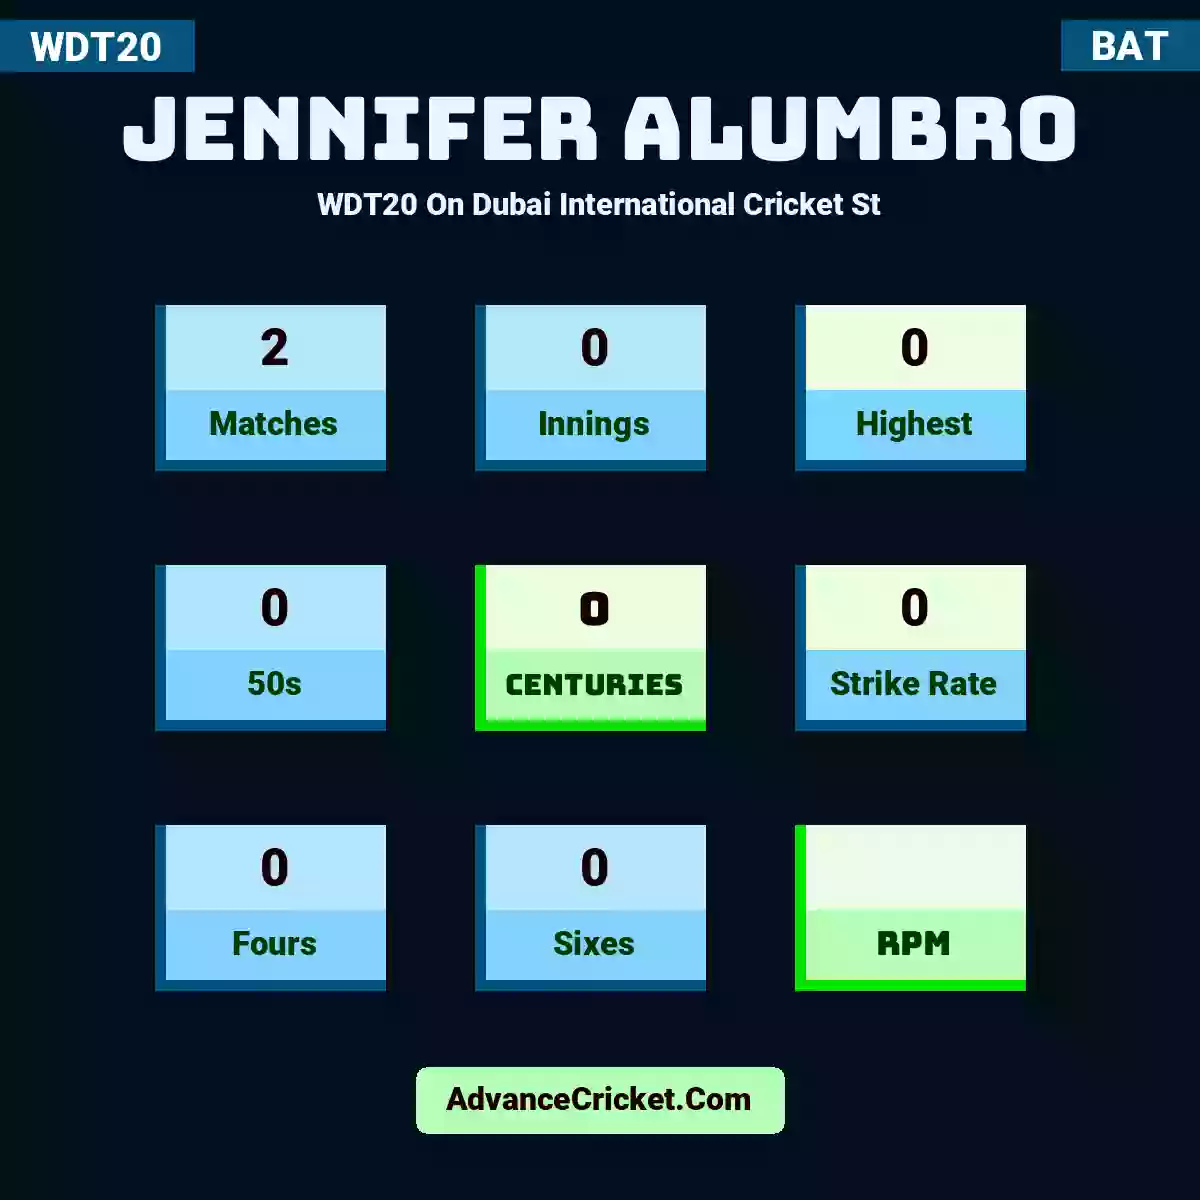 Jennifer Alumbro WDT20  On Dubai International Cricket St, Jennifer Alumbro played 2 matches, scored 0 runs as highest, 0 half-centuries, and 0 centuries, with a strike rate of 0. J.Alumbro hit 0 fours and 0 sixes.